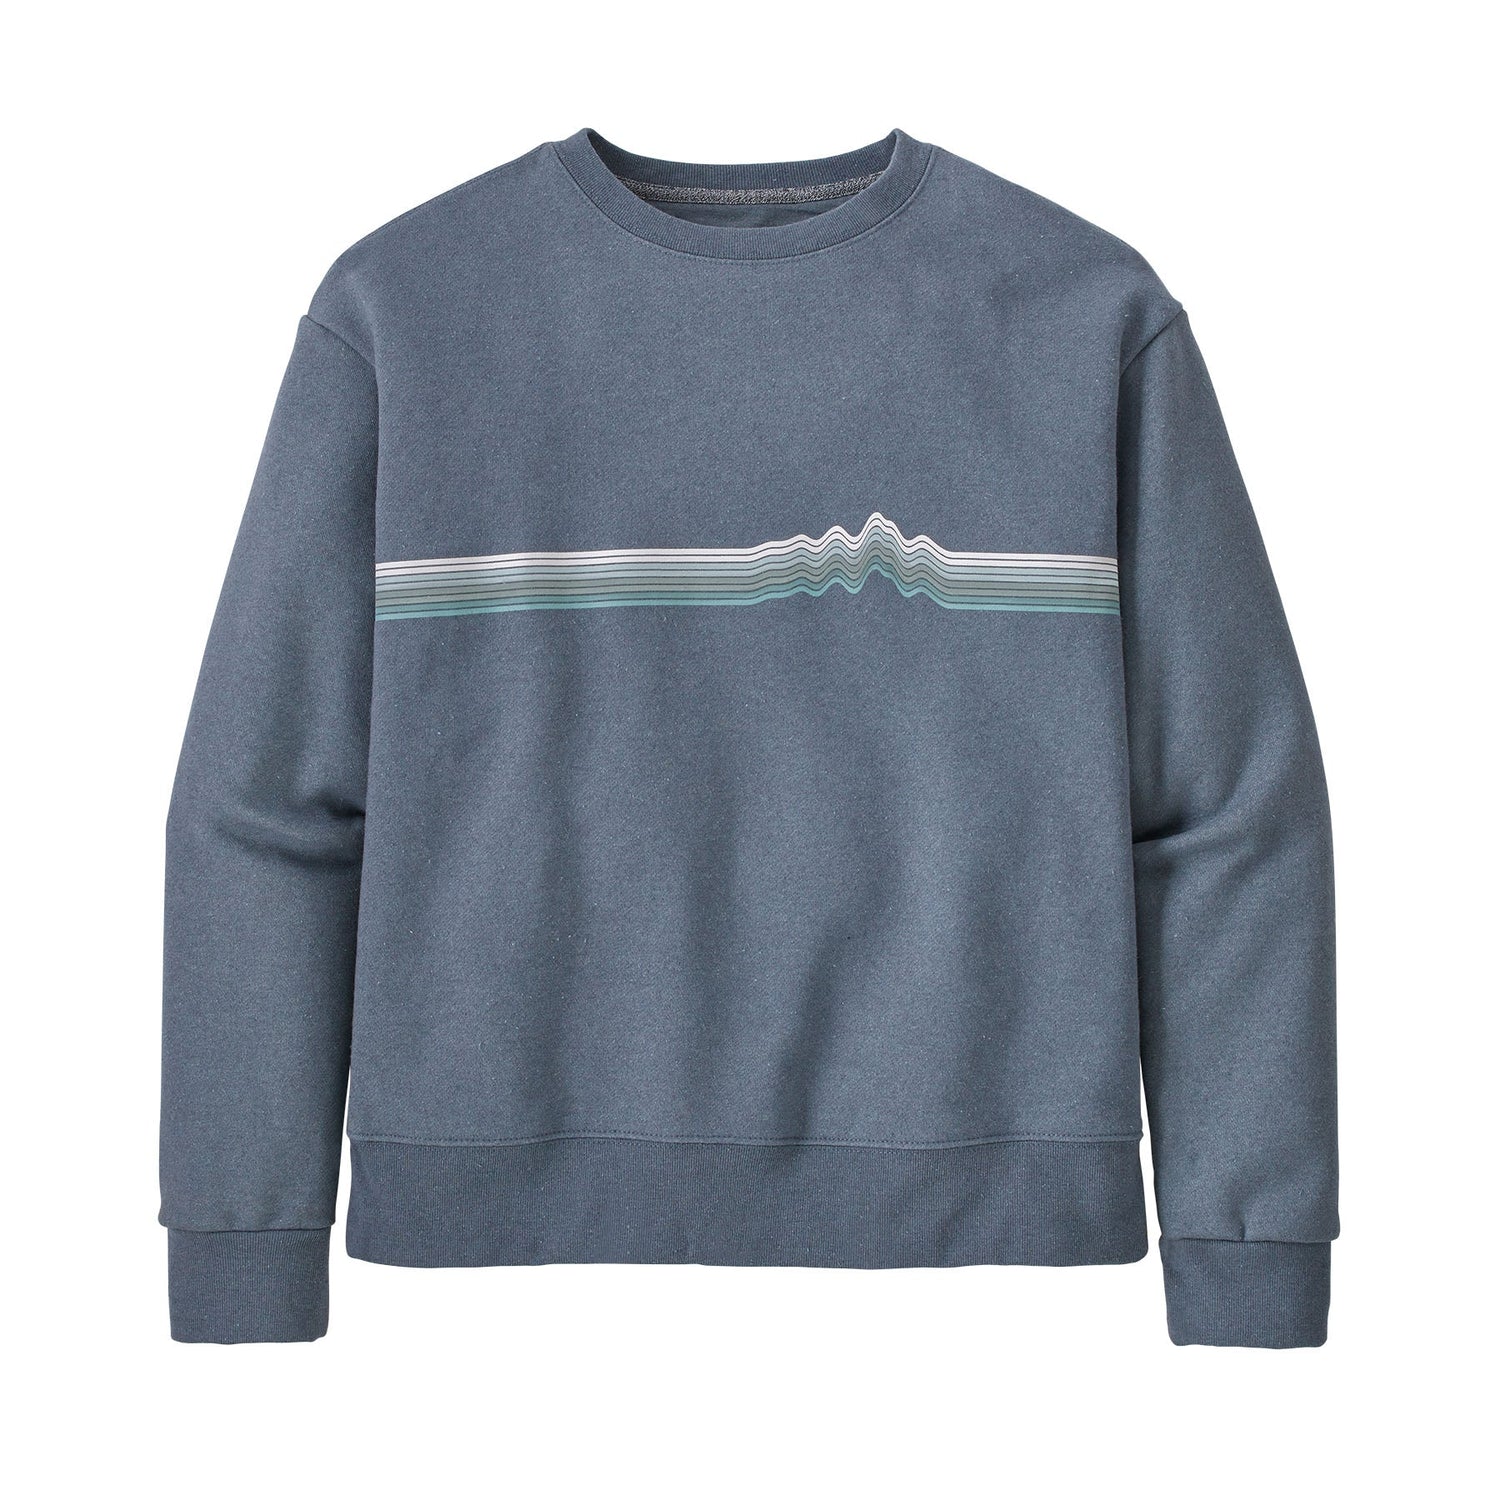 Patagonia - W's Ridge Rise Stripe Uprisal Crew Sweatshirt - Recycled Polyester & Recycled Cotton - Weekendbee - sustainable sportswear